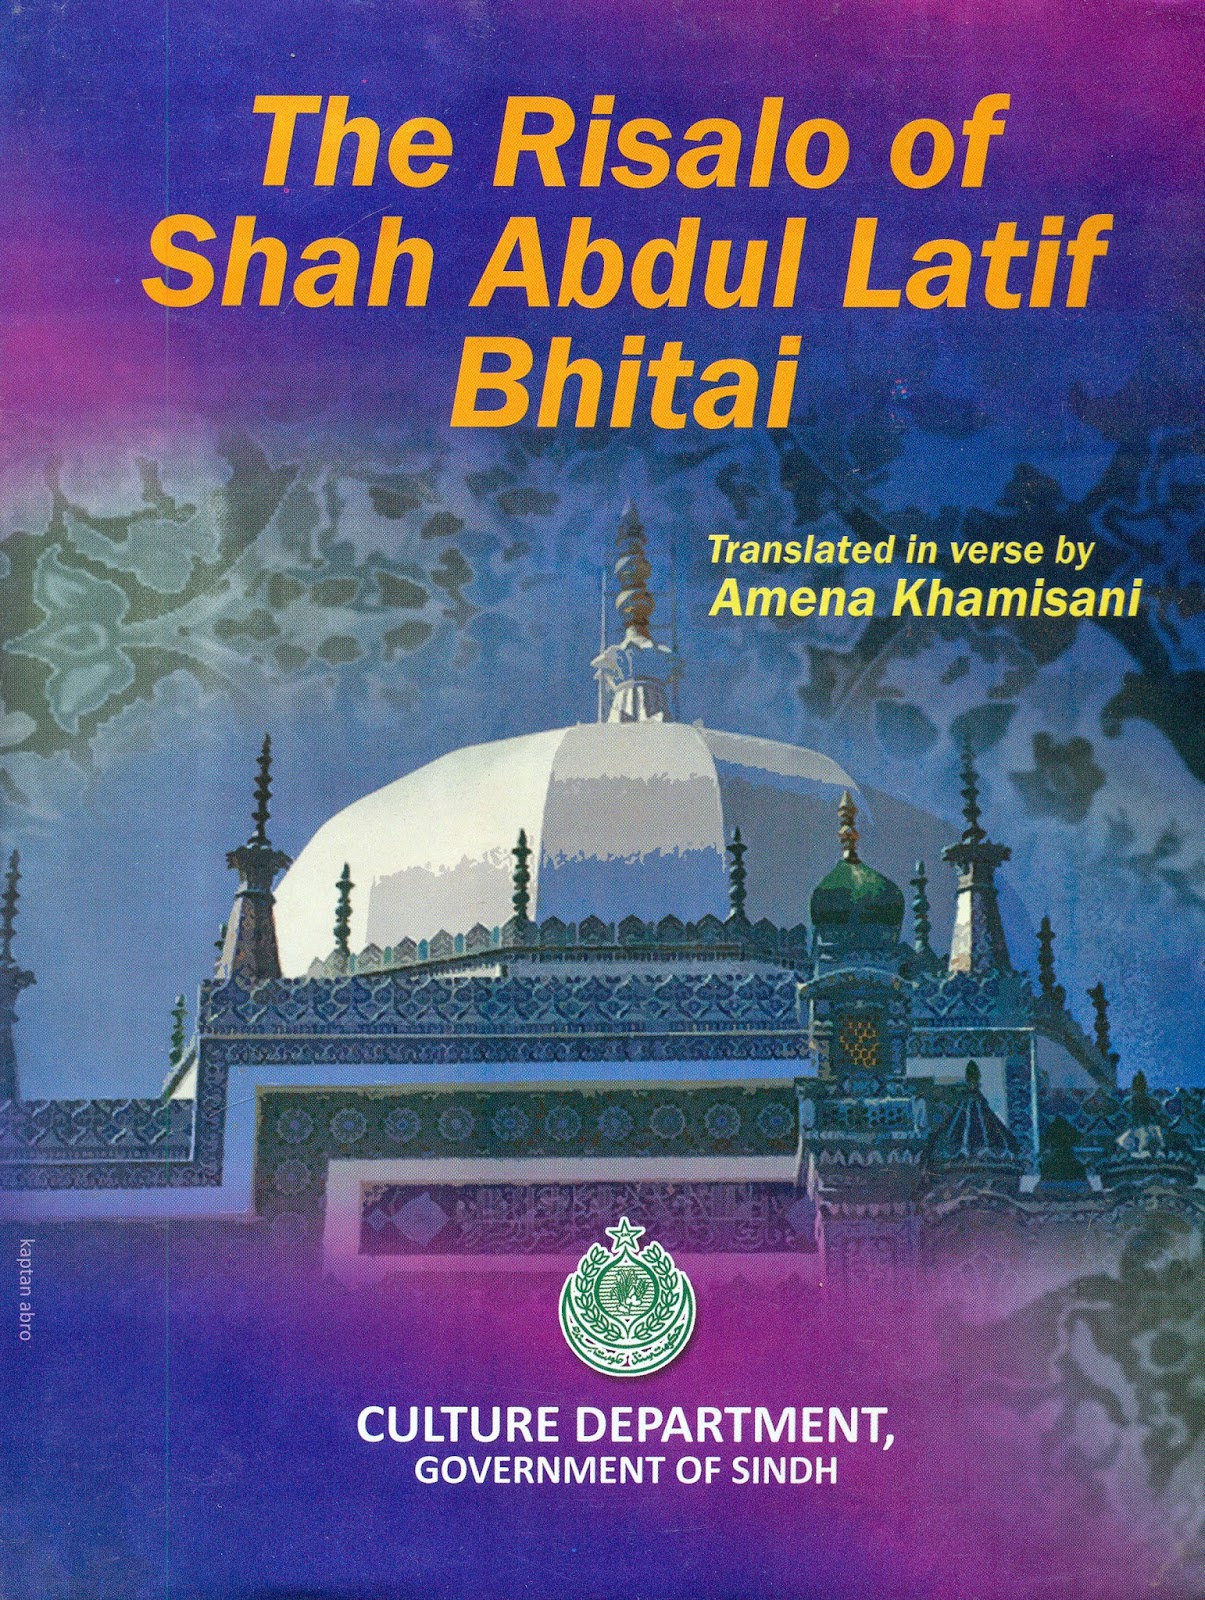 http://www.bhittai-latif.com/index.html